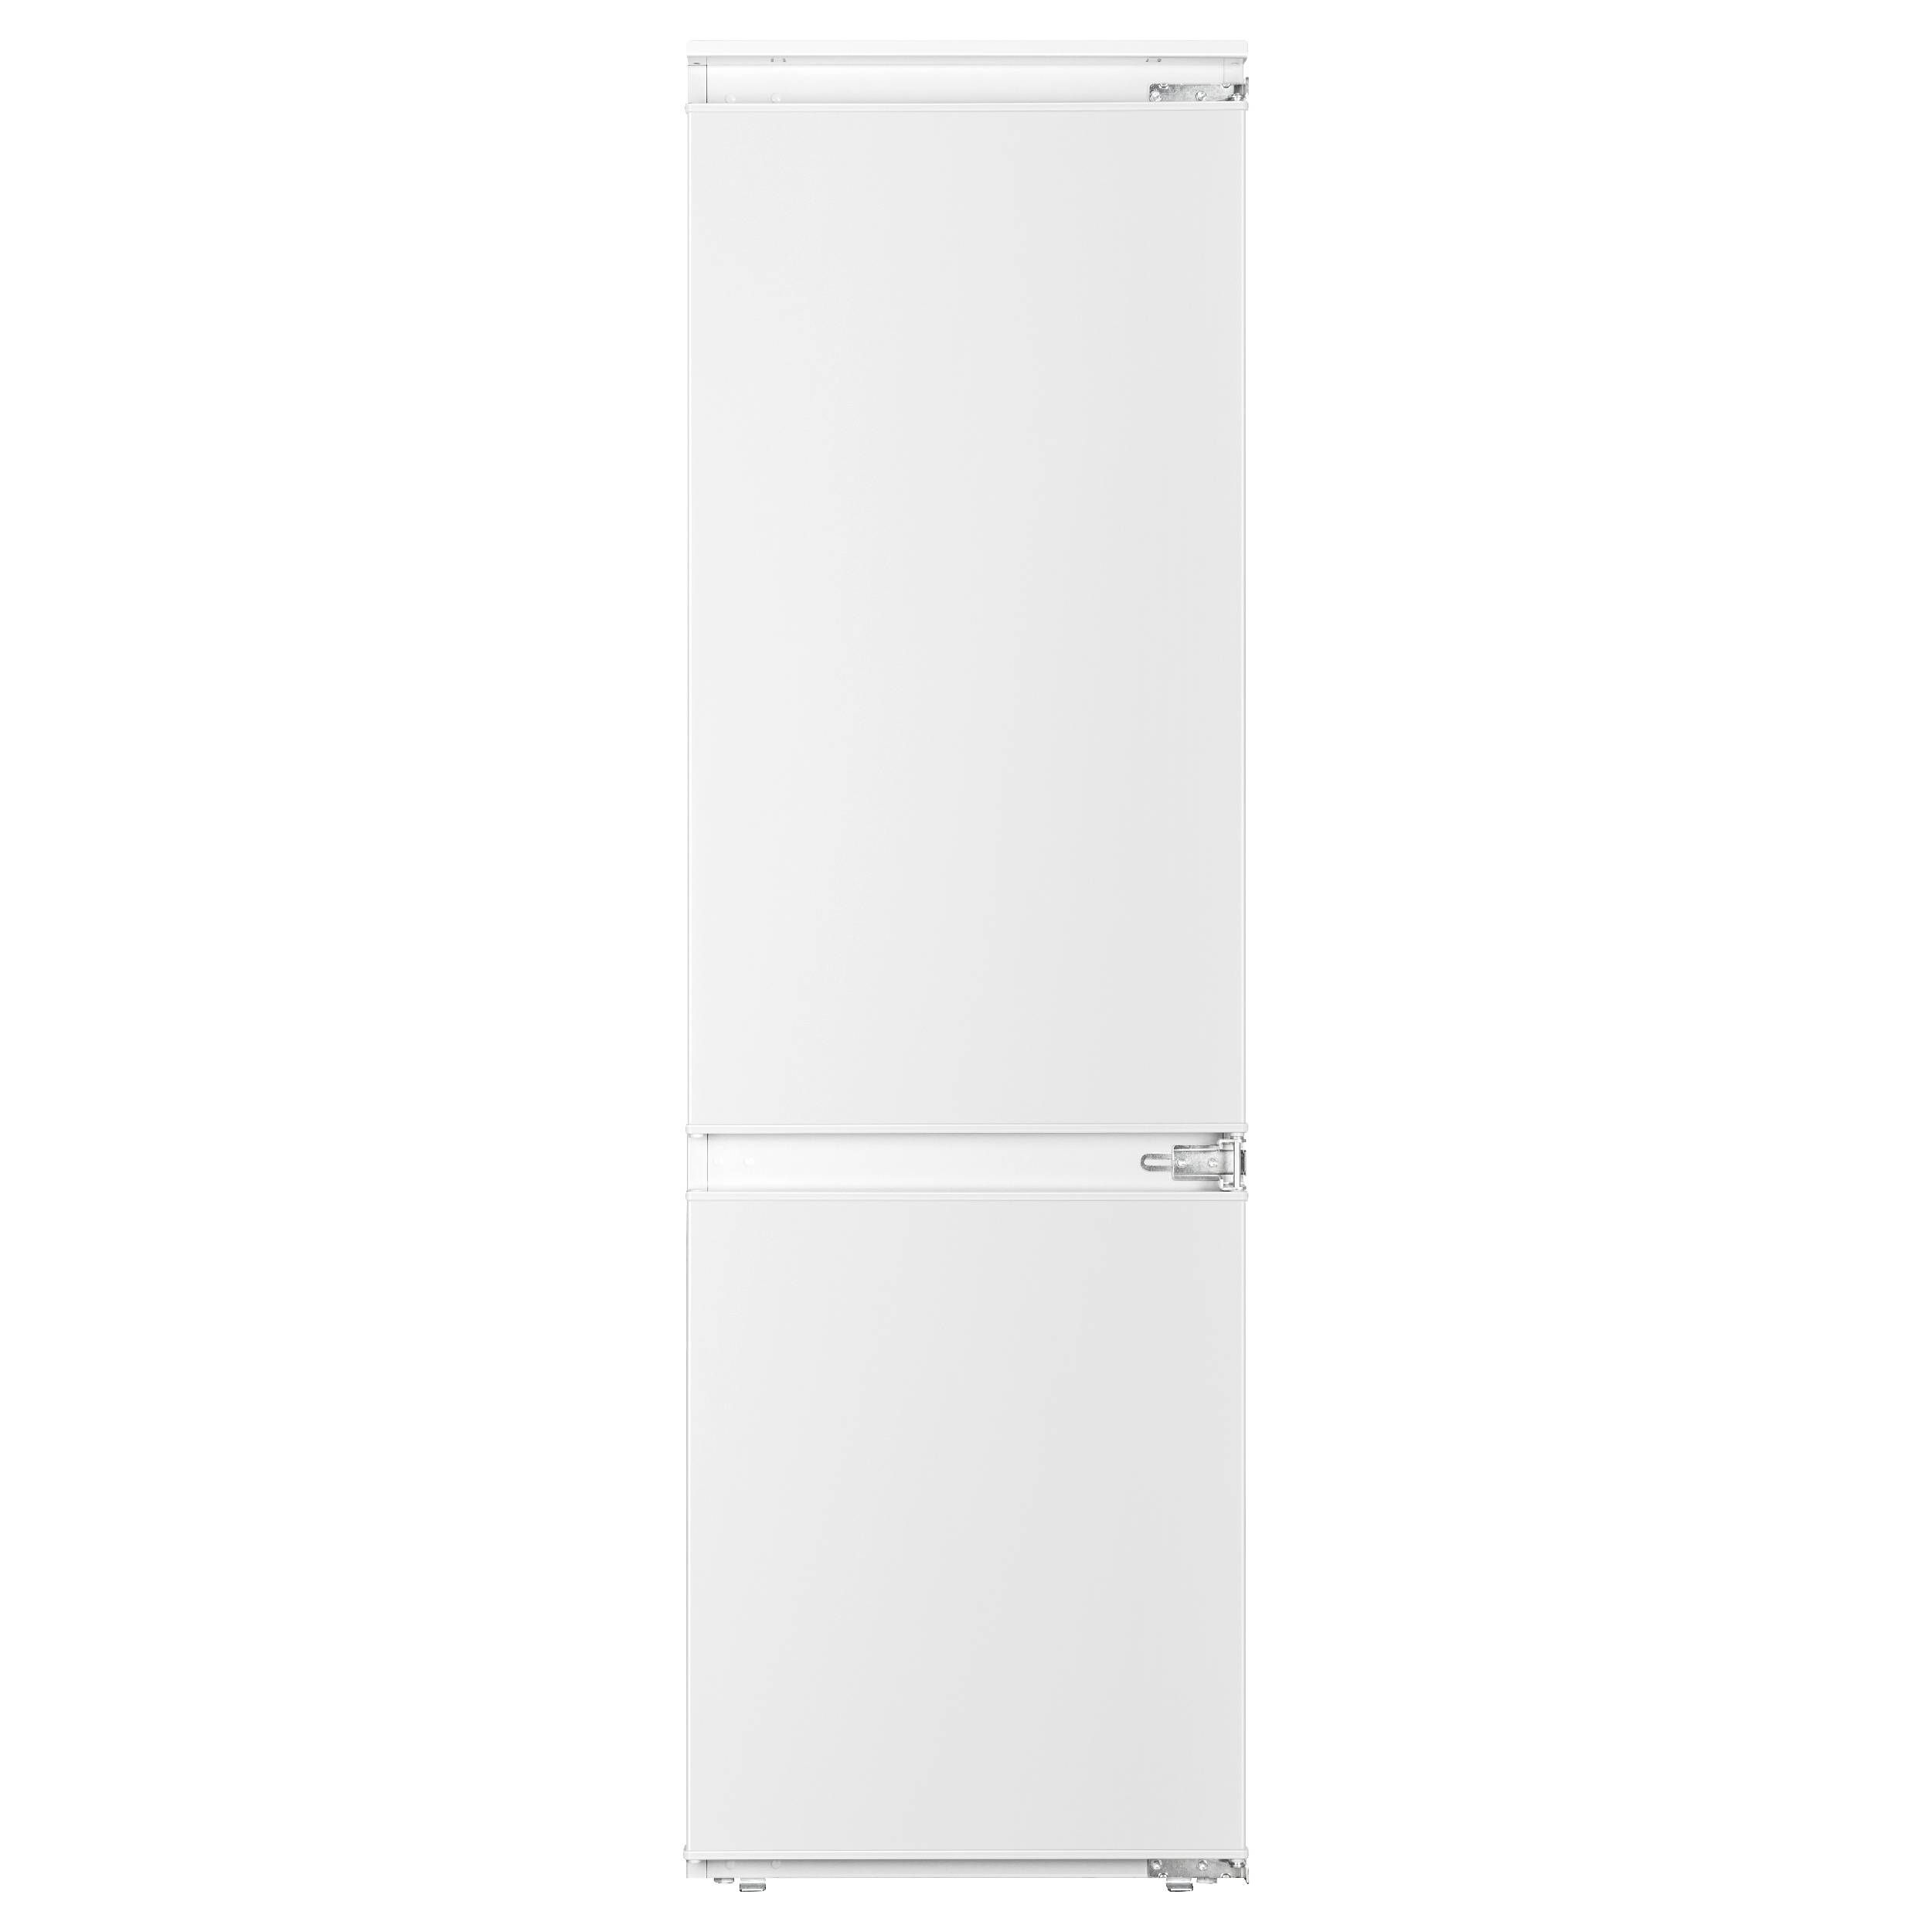 Холодильник Evelux FI 2200